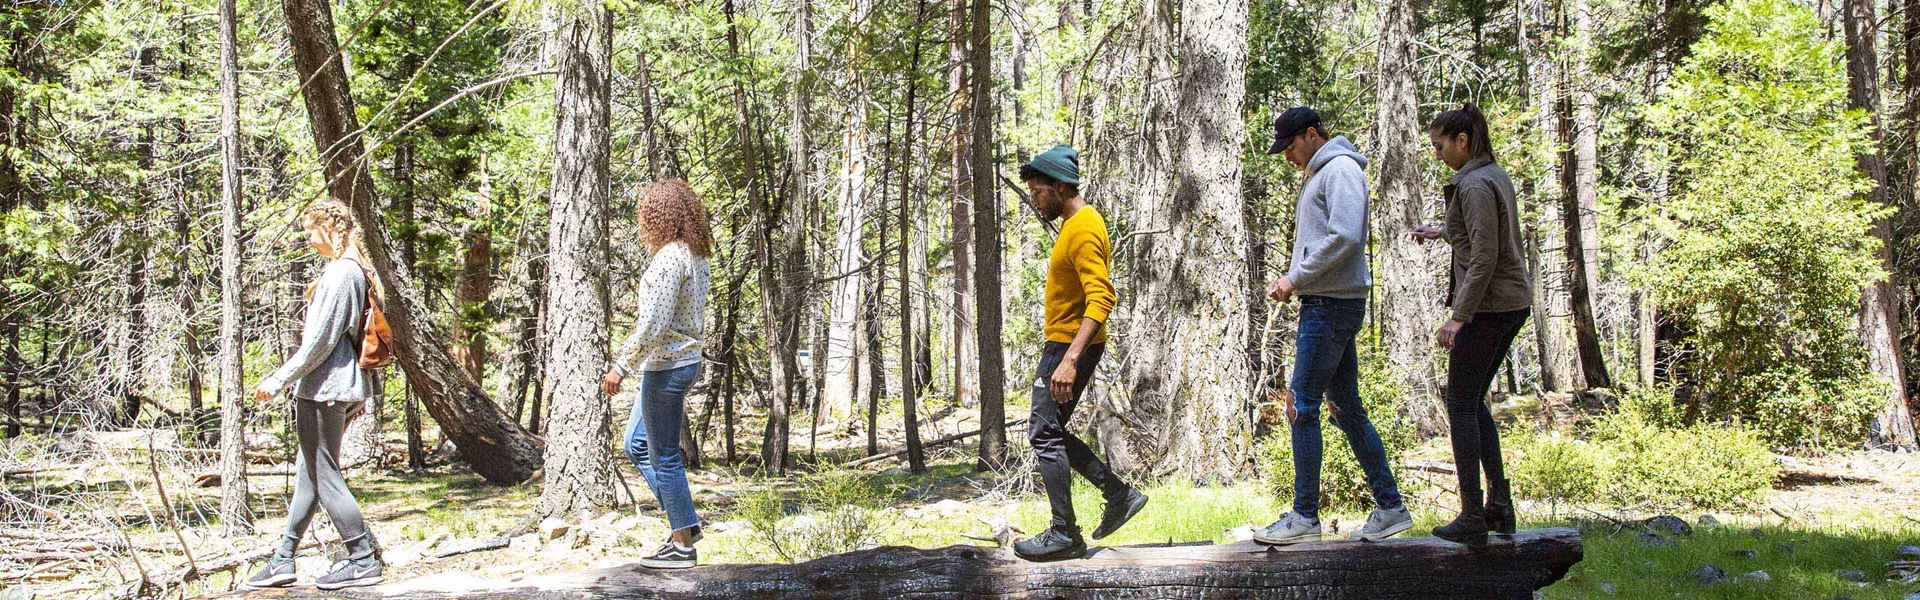 Group Exploring Yosemite Park Walking Along Fallen Tree Usa 0504AMER2018